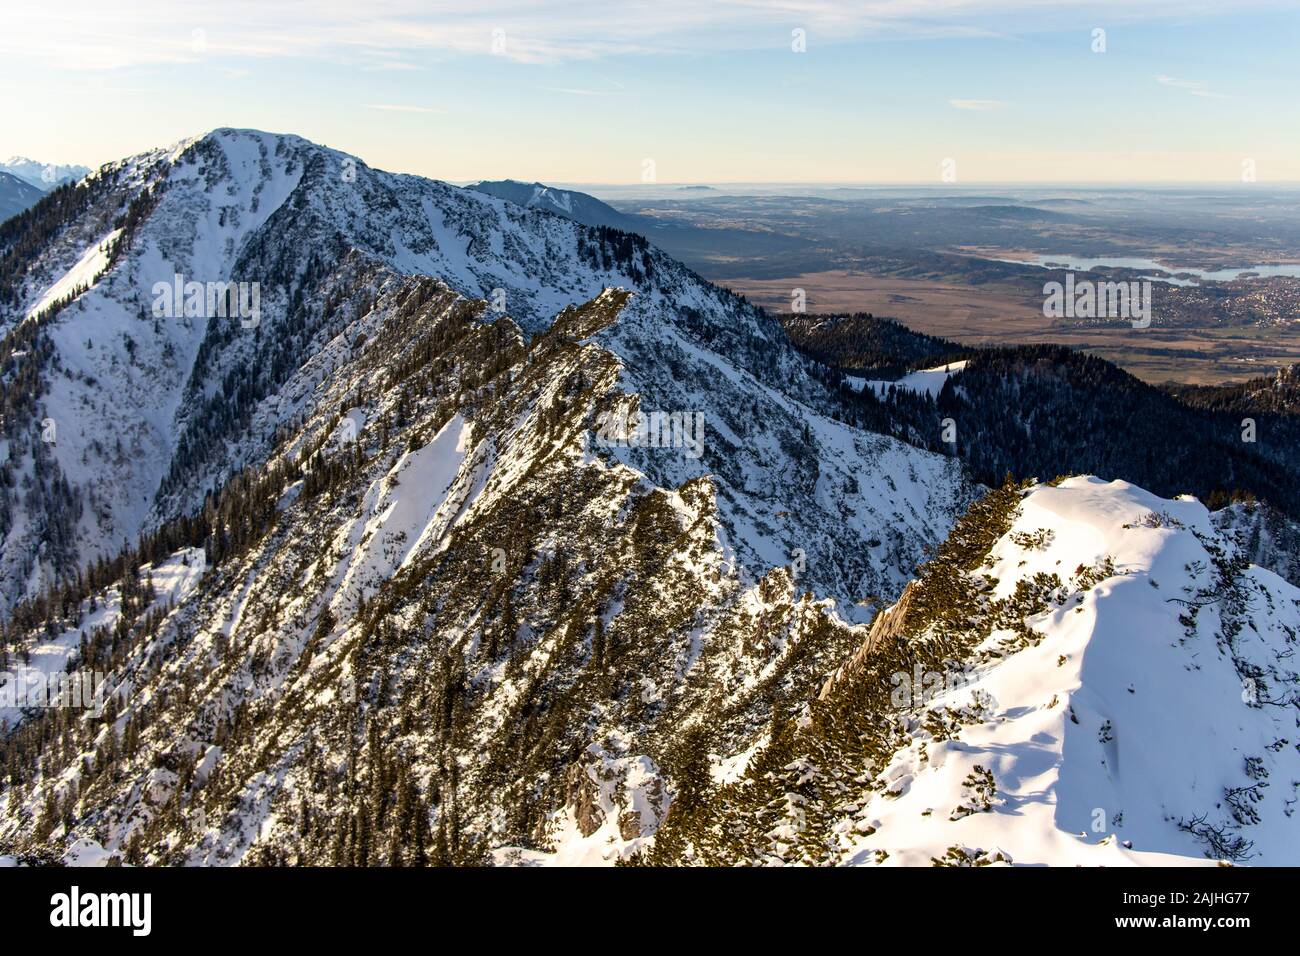 heimgarten peak in the bavarian alps Stock Photo